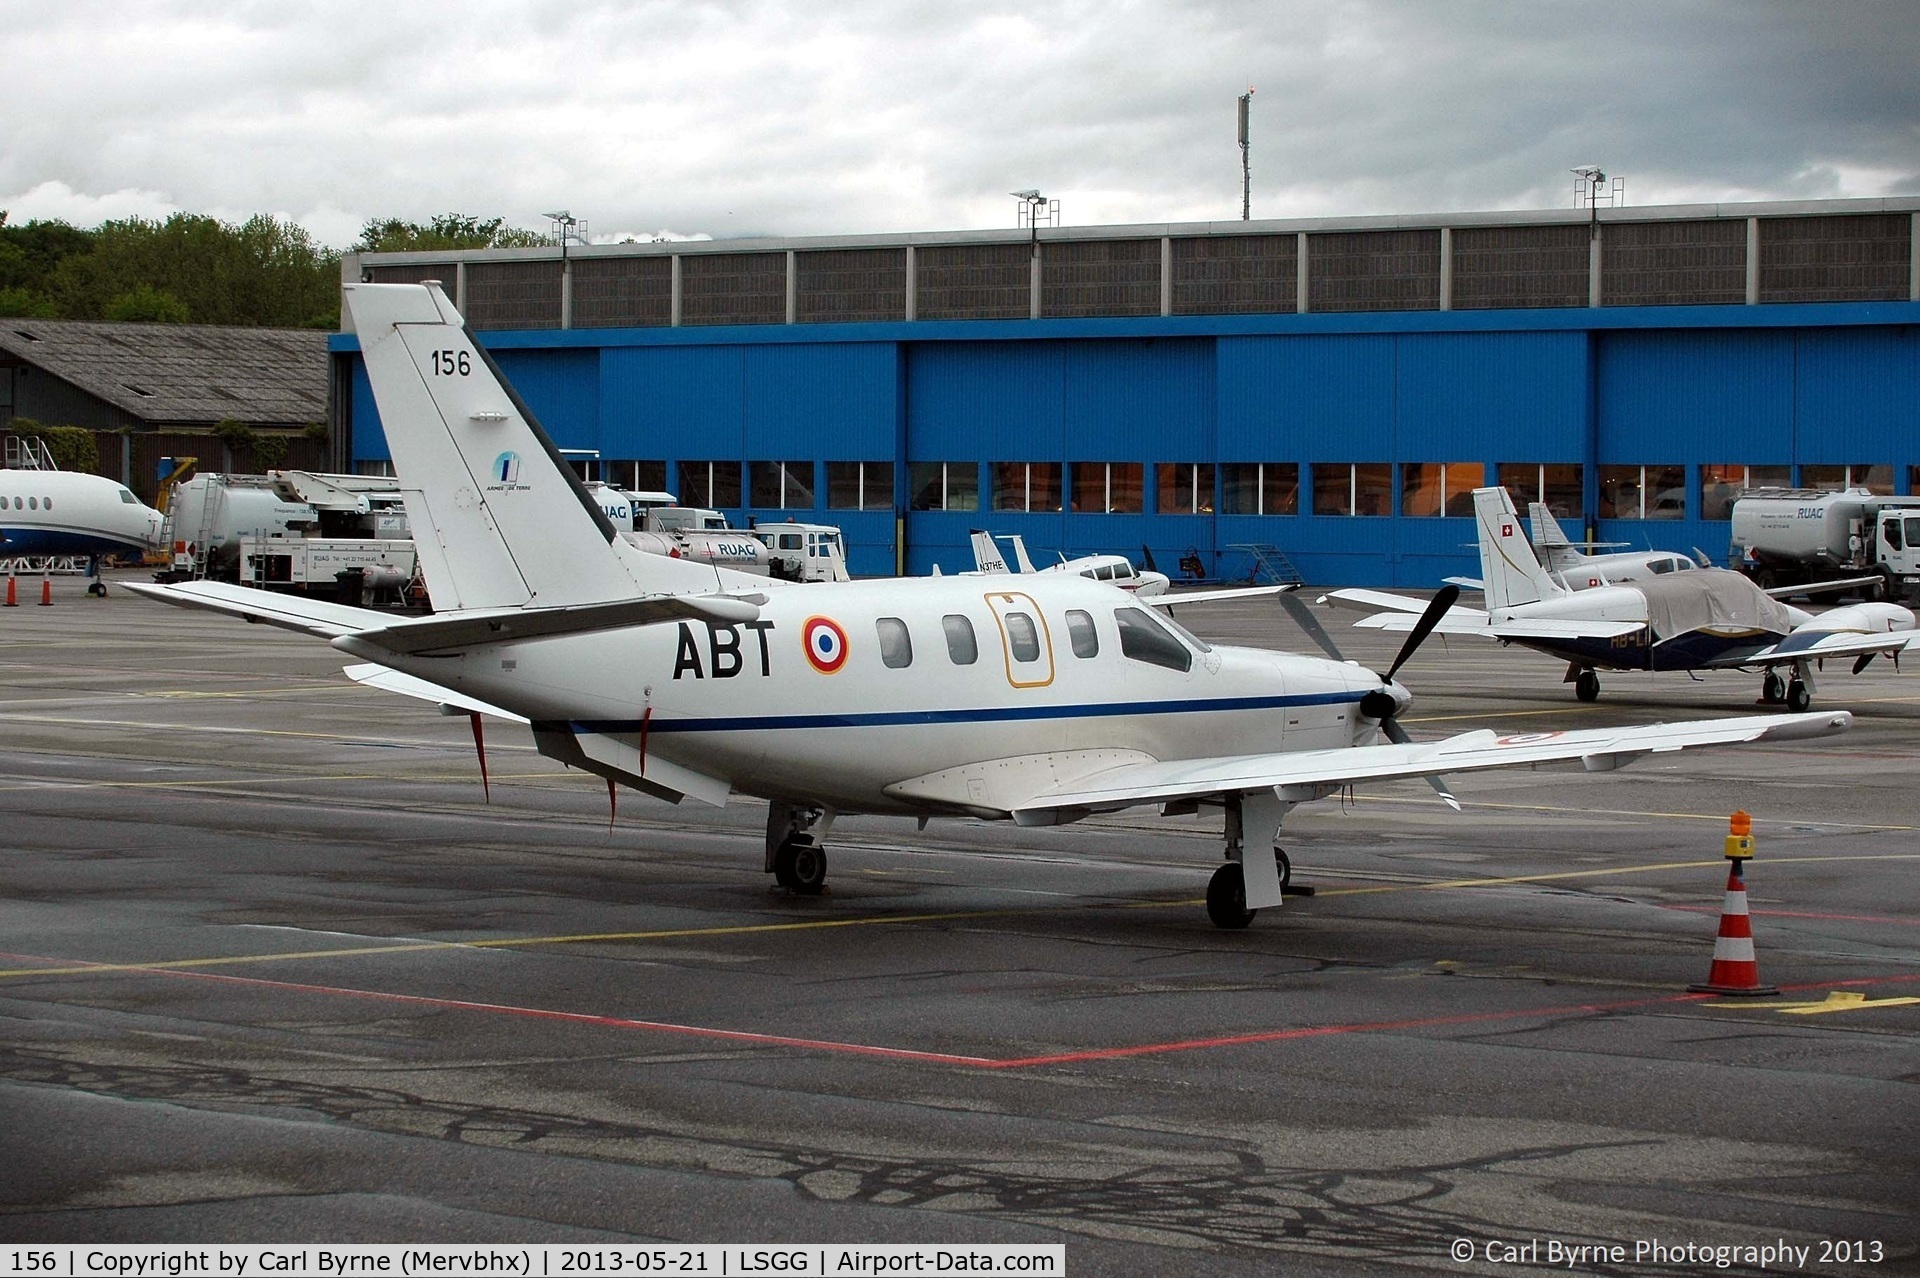 156, 1999 Socata TBM-700 C/N 156, Taken from the Aerobistro.